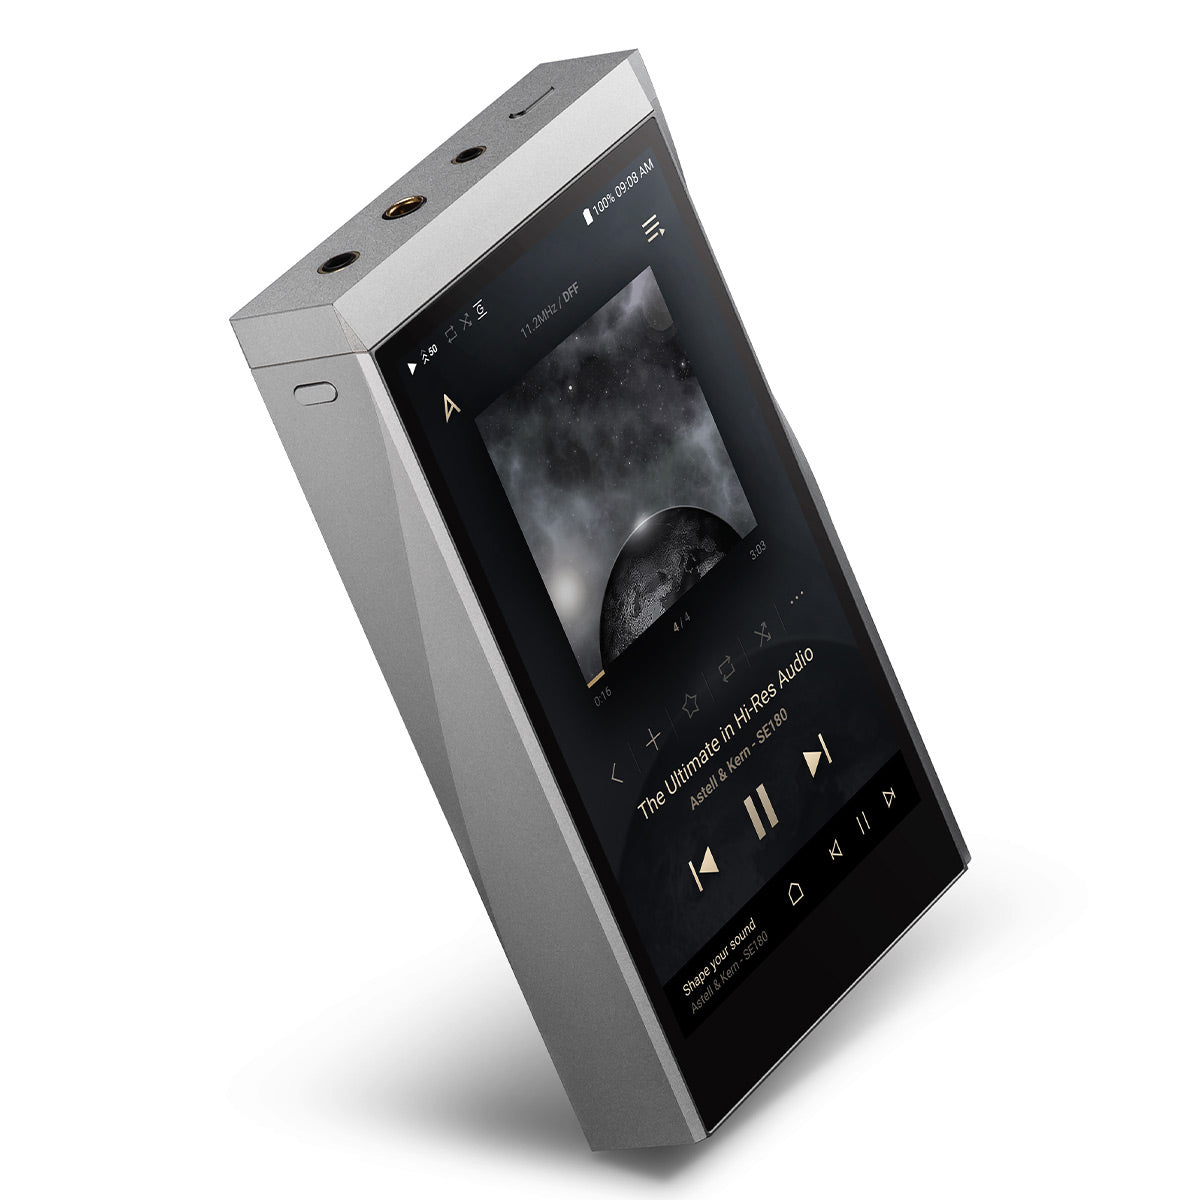 Astell & Kern A&Futura SE180 Portable High-Resolution Music Player